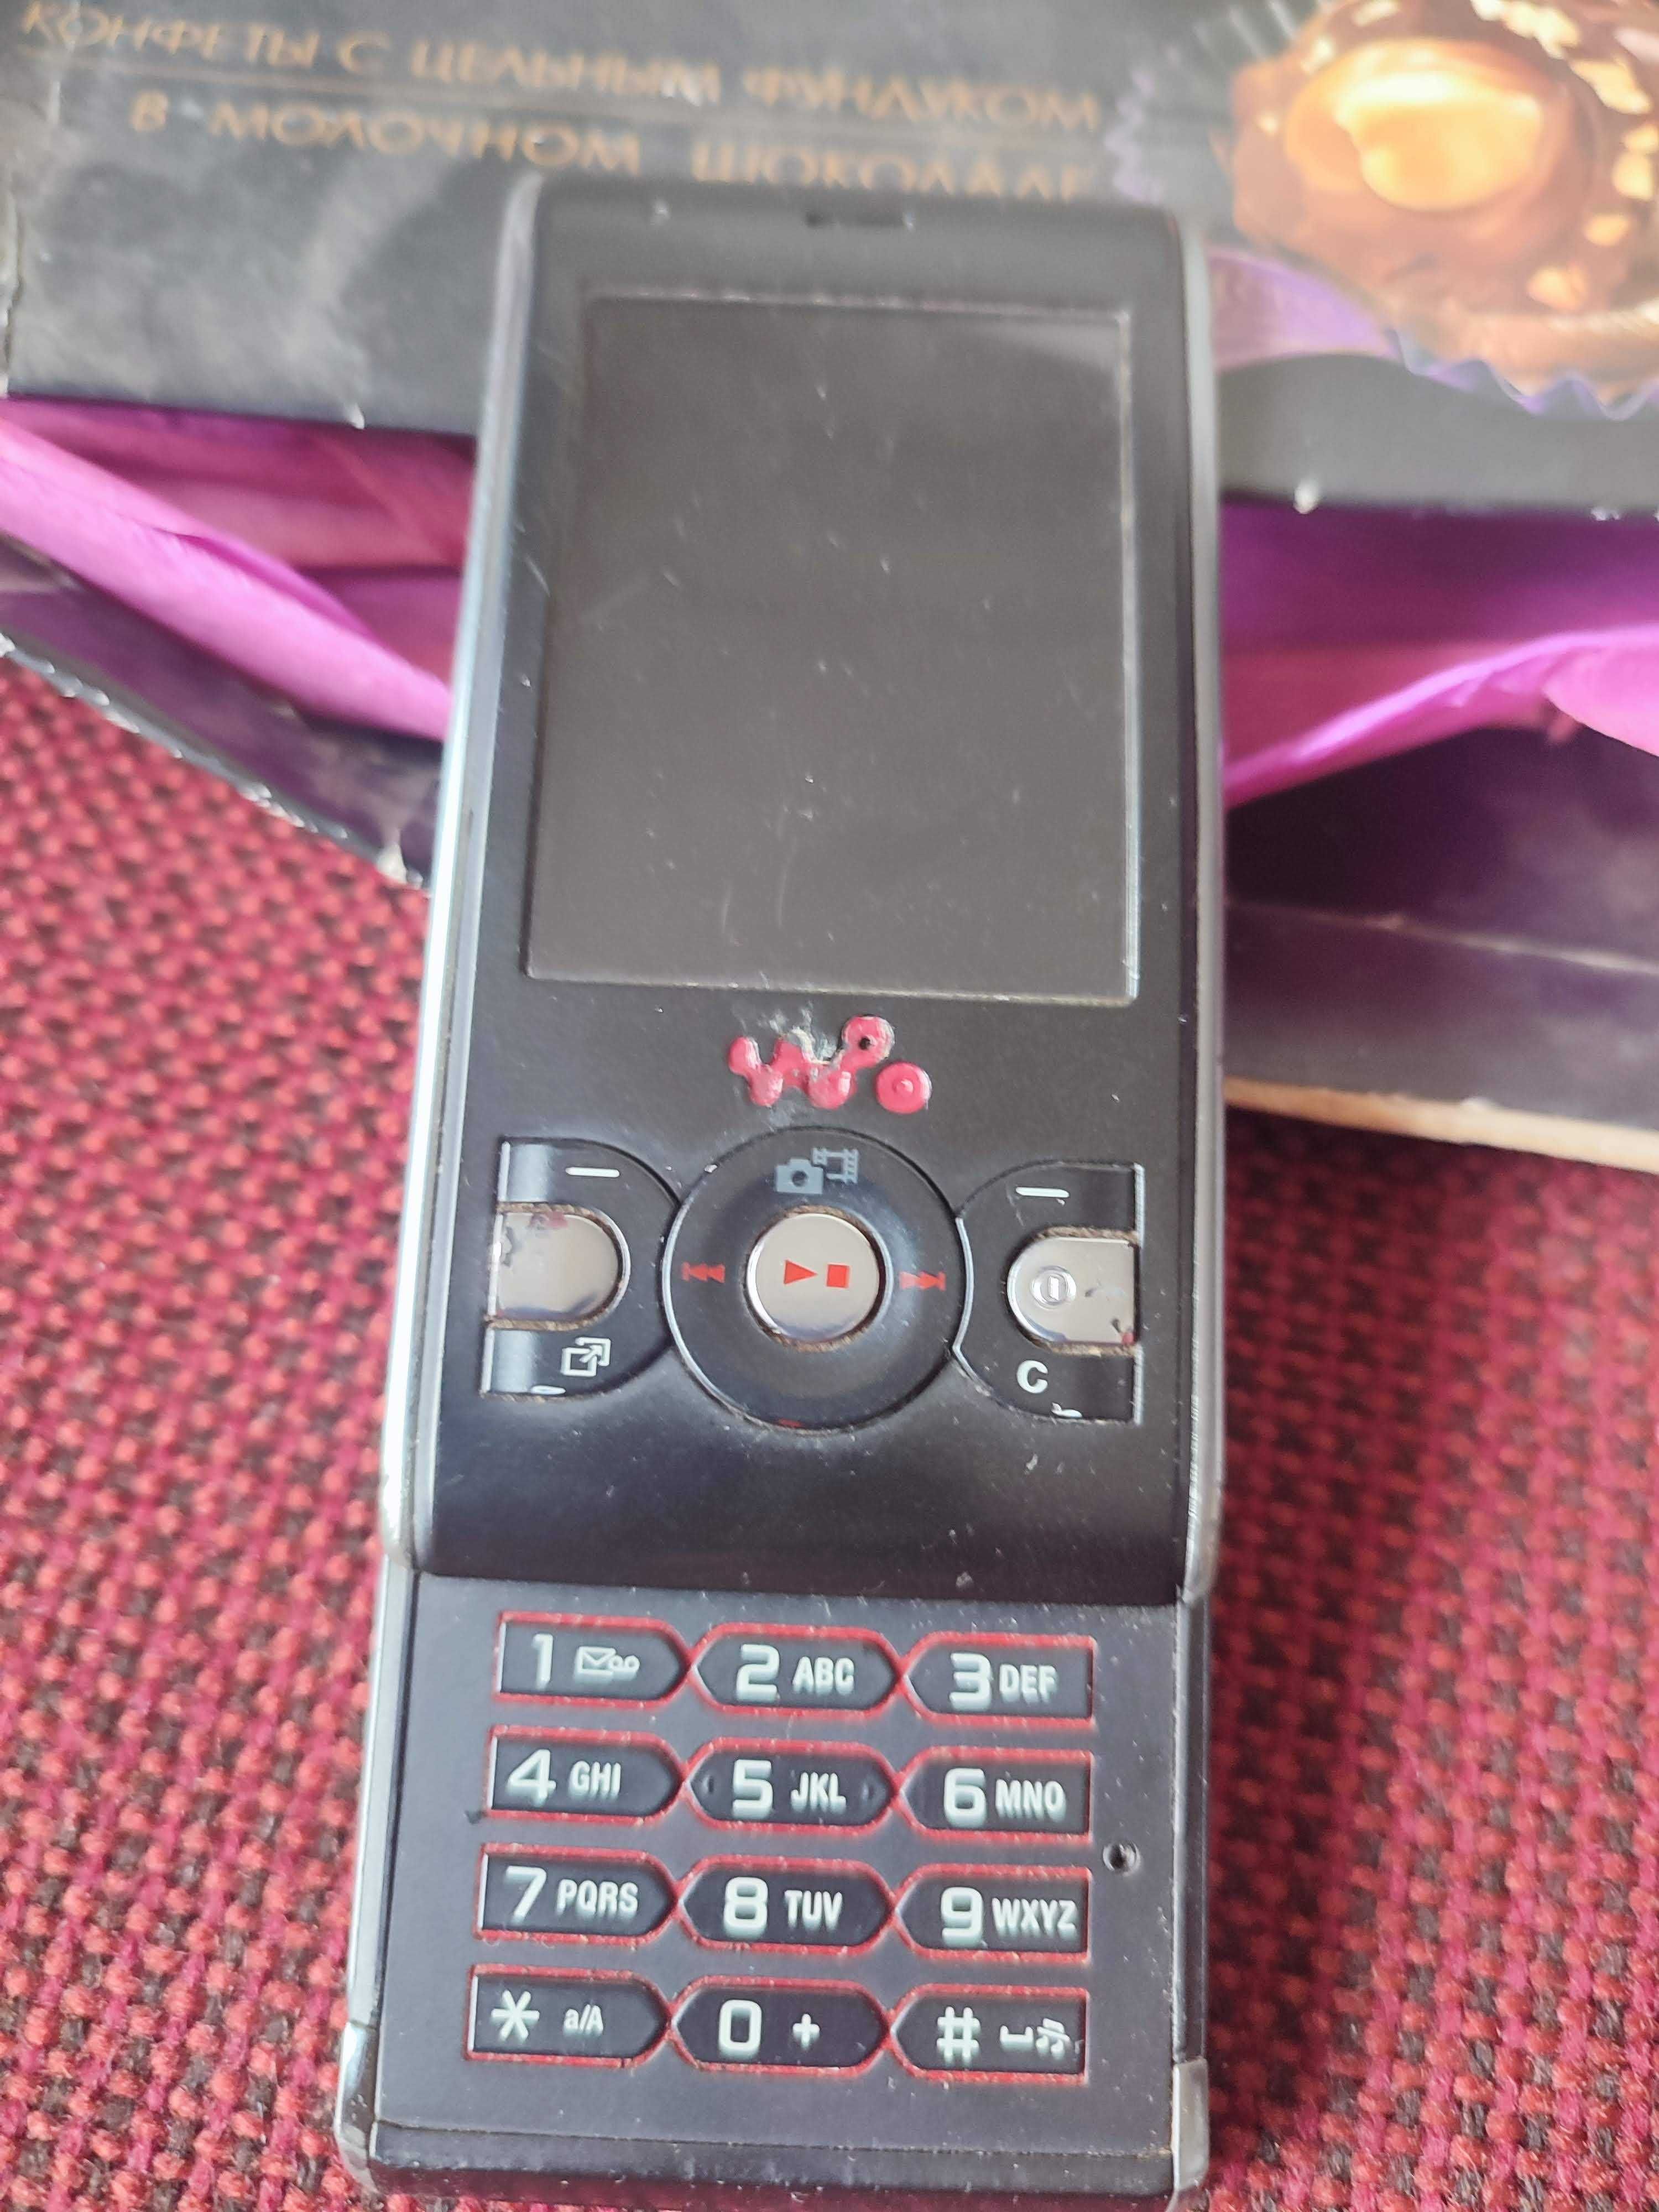 Мобільний телефон Sony Ericson бабушкофон фонарик потужна батарея